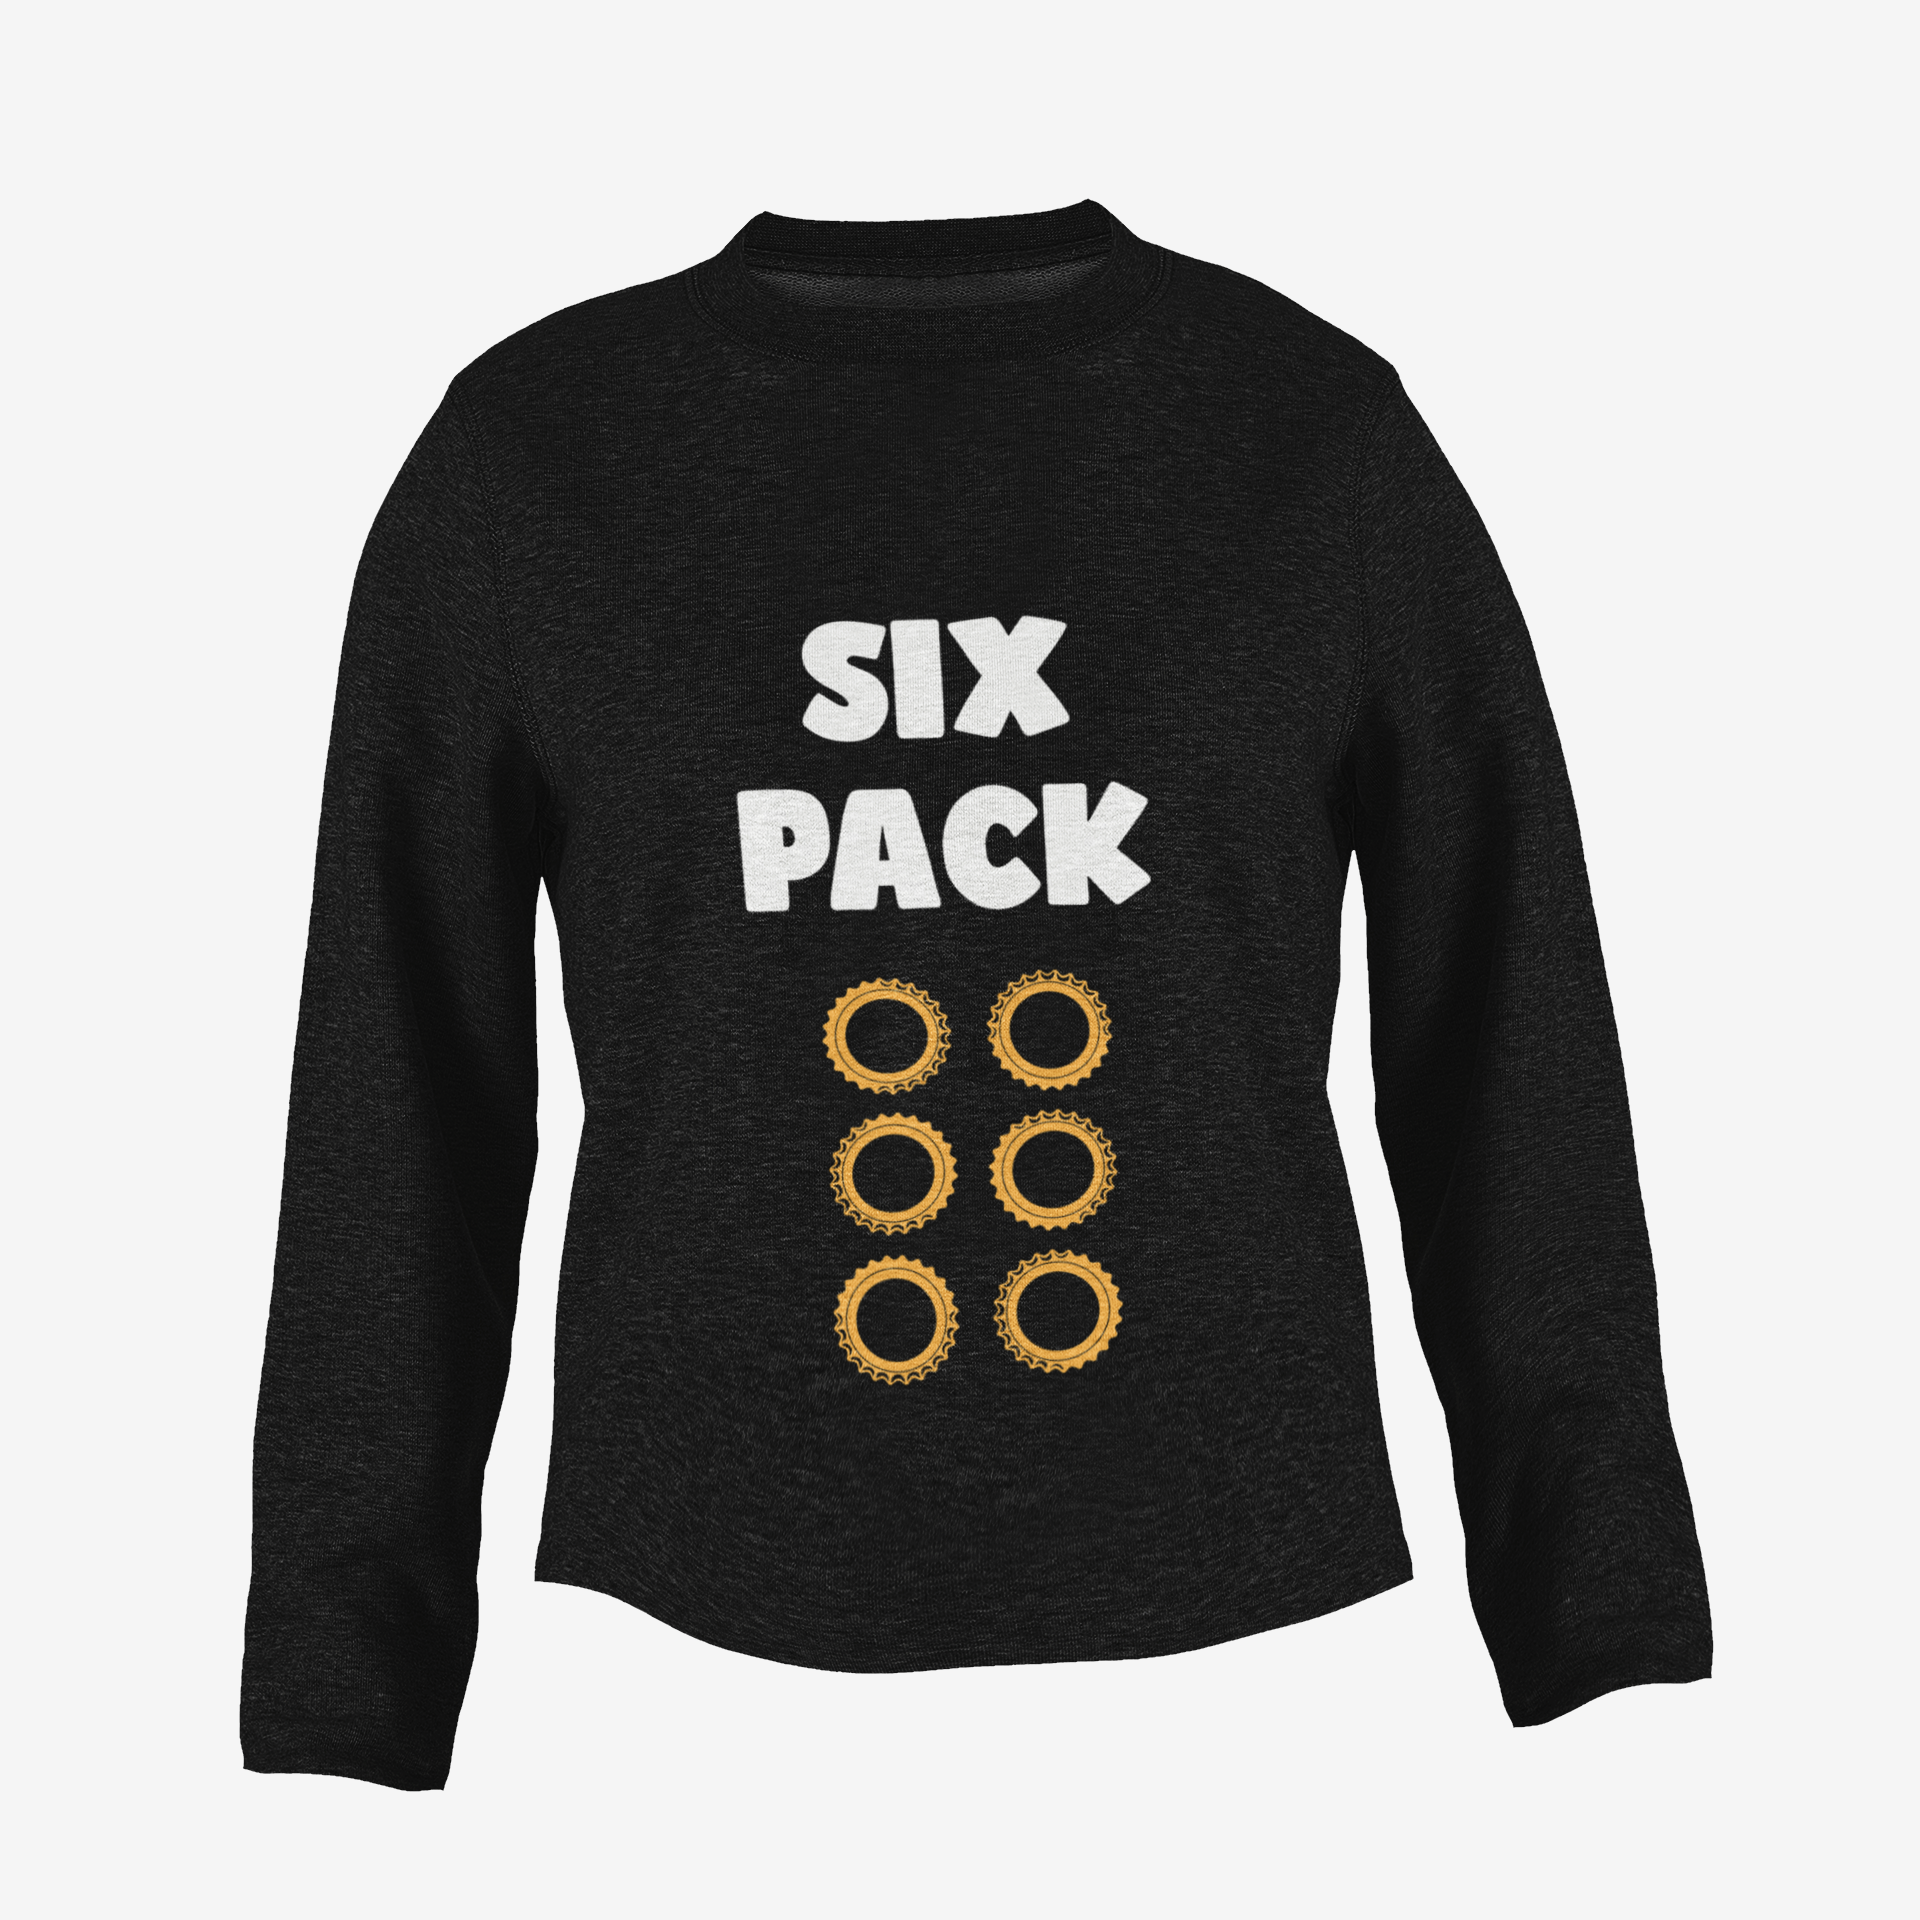 "Six Pack" Sweatshirt